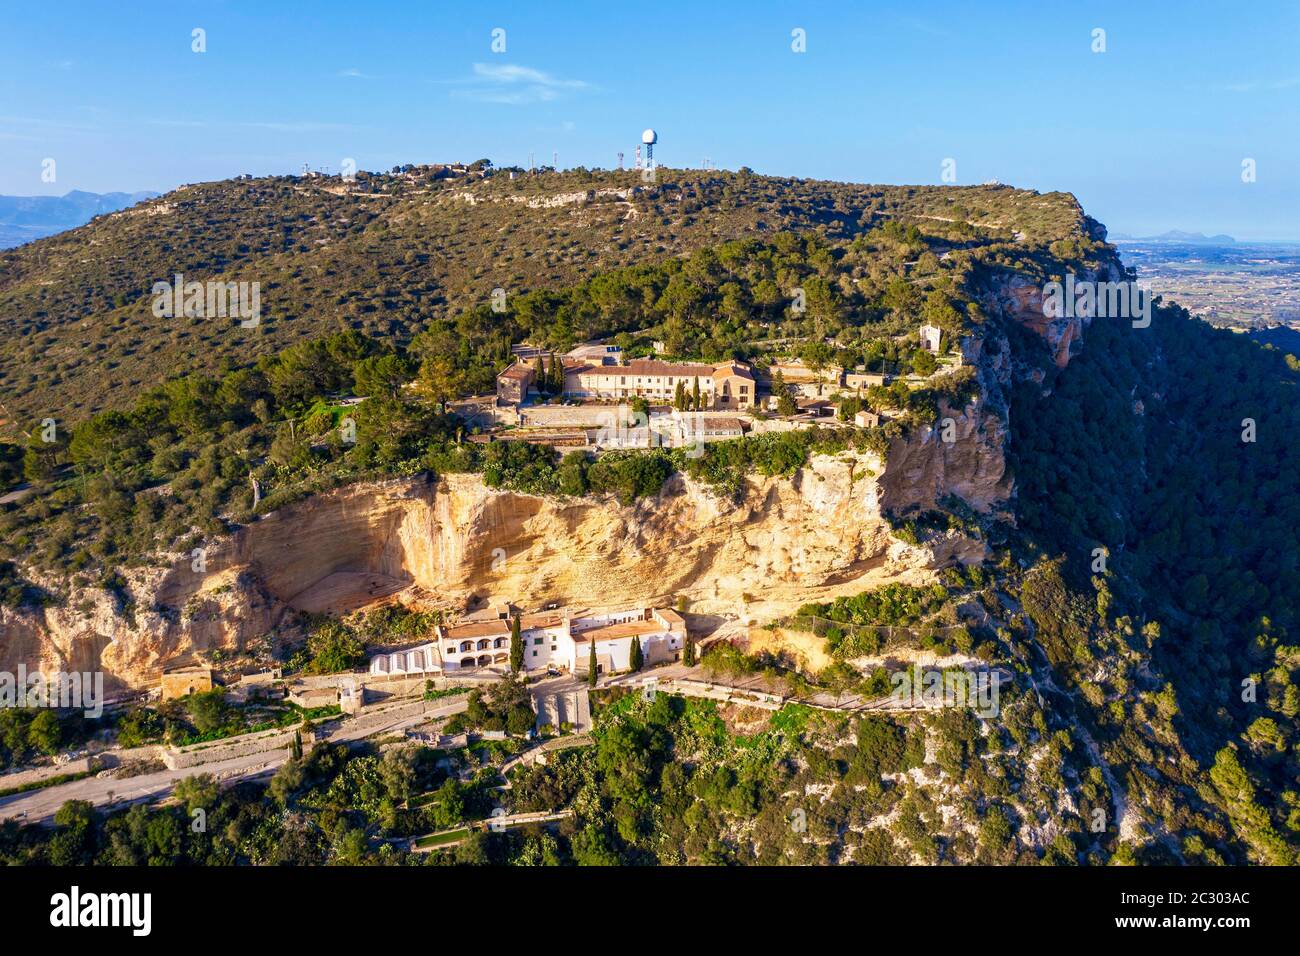 Monasteri Santuari de nostra Senyora de Gracia e Ermita de Sant Honorat, Puig de Randa, regione Pla de Mallorca, registrazione dei droni, Maiorca, Baleari Foto Stock